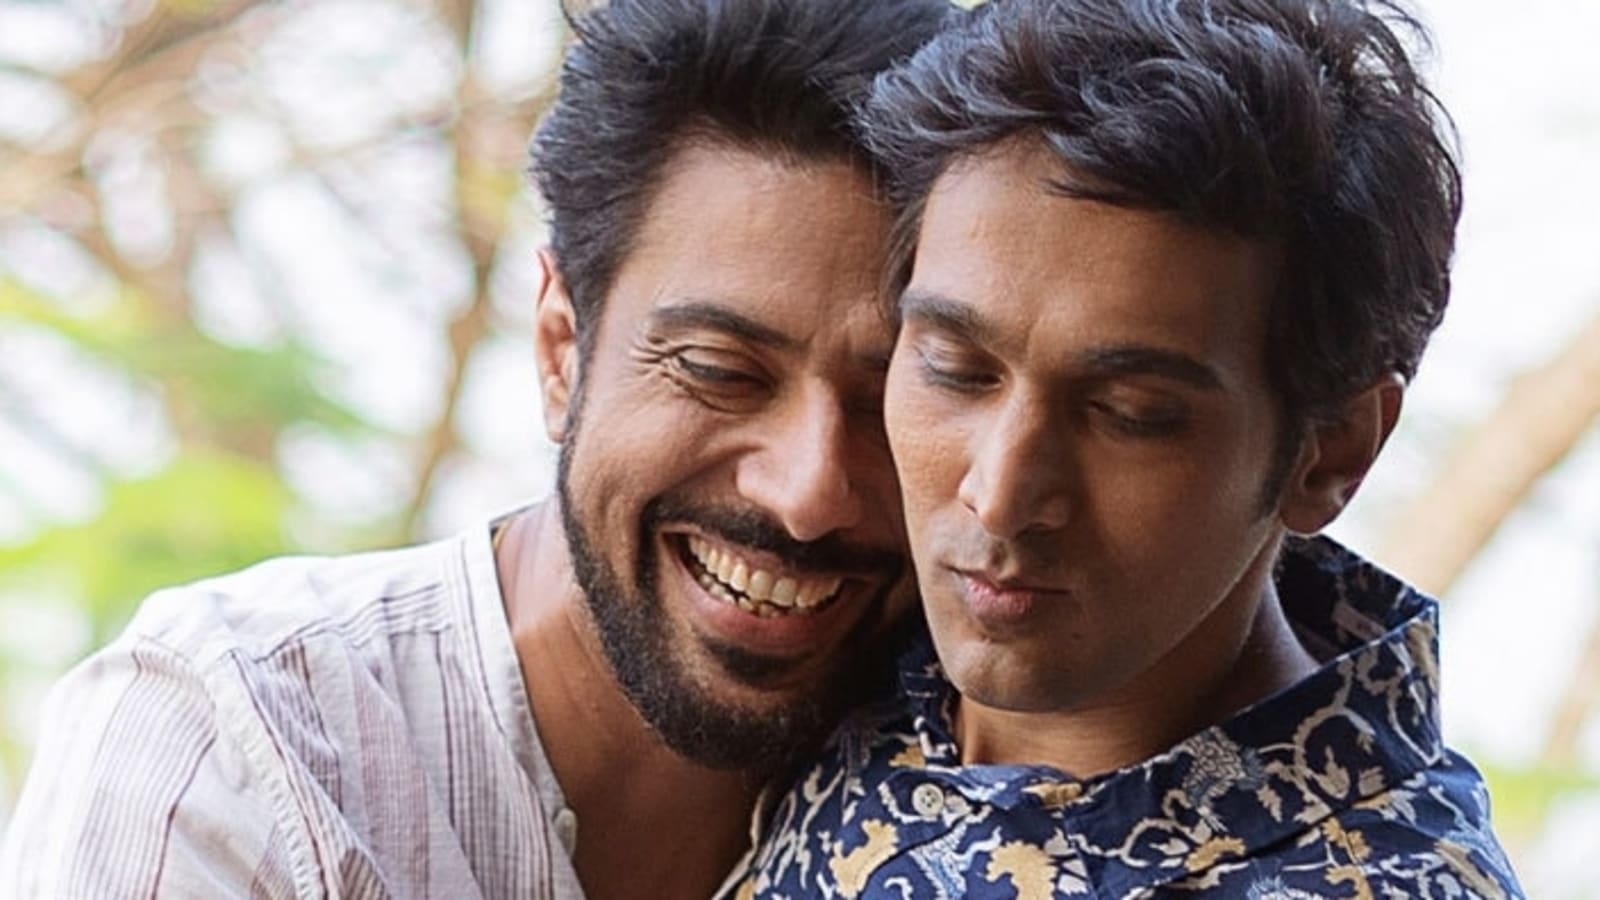 Jitendra Ki Mp3 Xnxx Video - Modern Love Mumbai episode on gay love missing from Amazon Prime Video in  UAE | Web Series - Hindustan Times